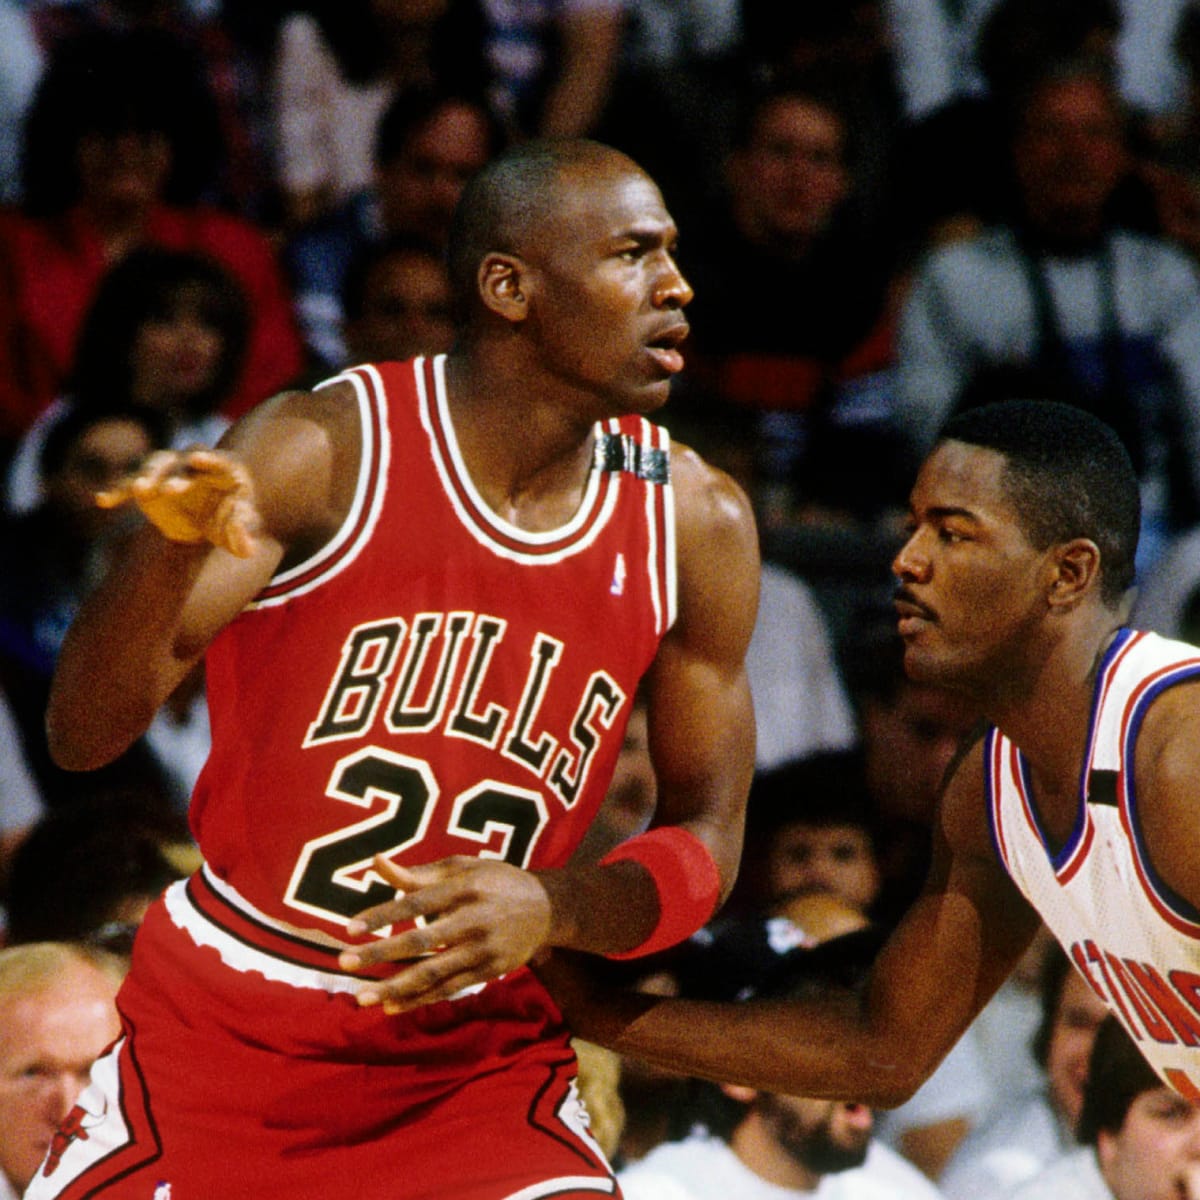 You would never have heard of Michael Jordan!-John Salley reveals